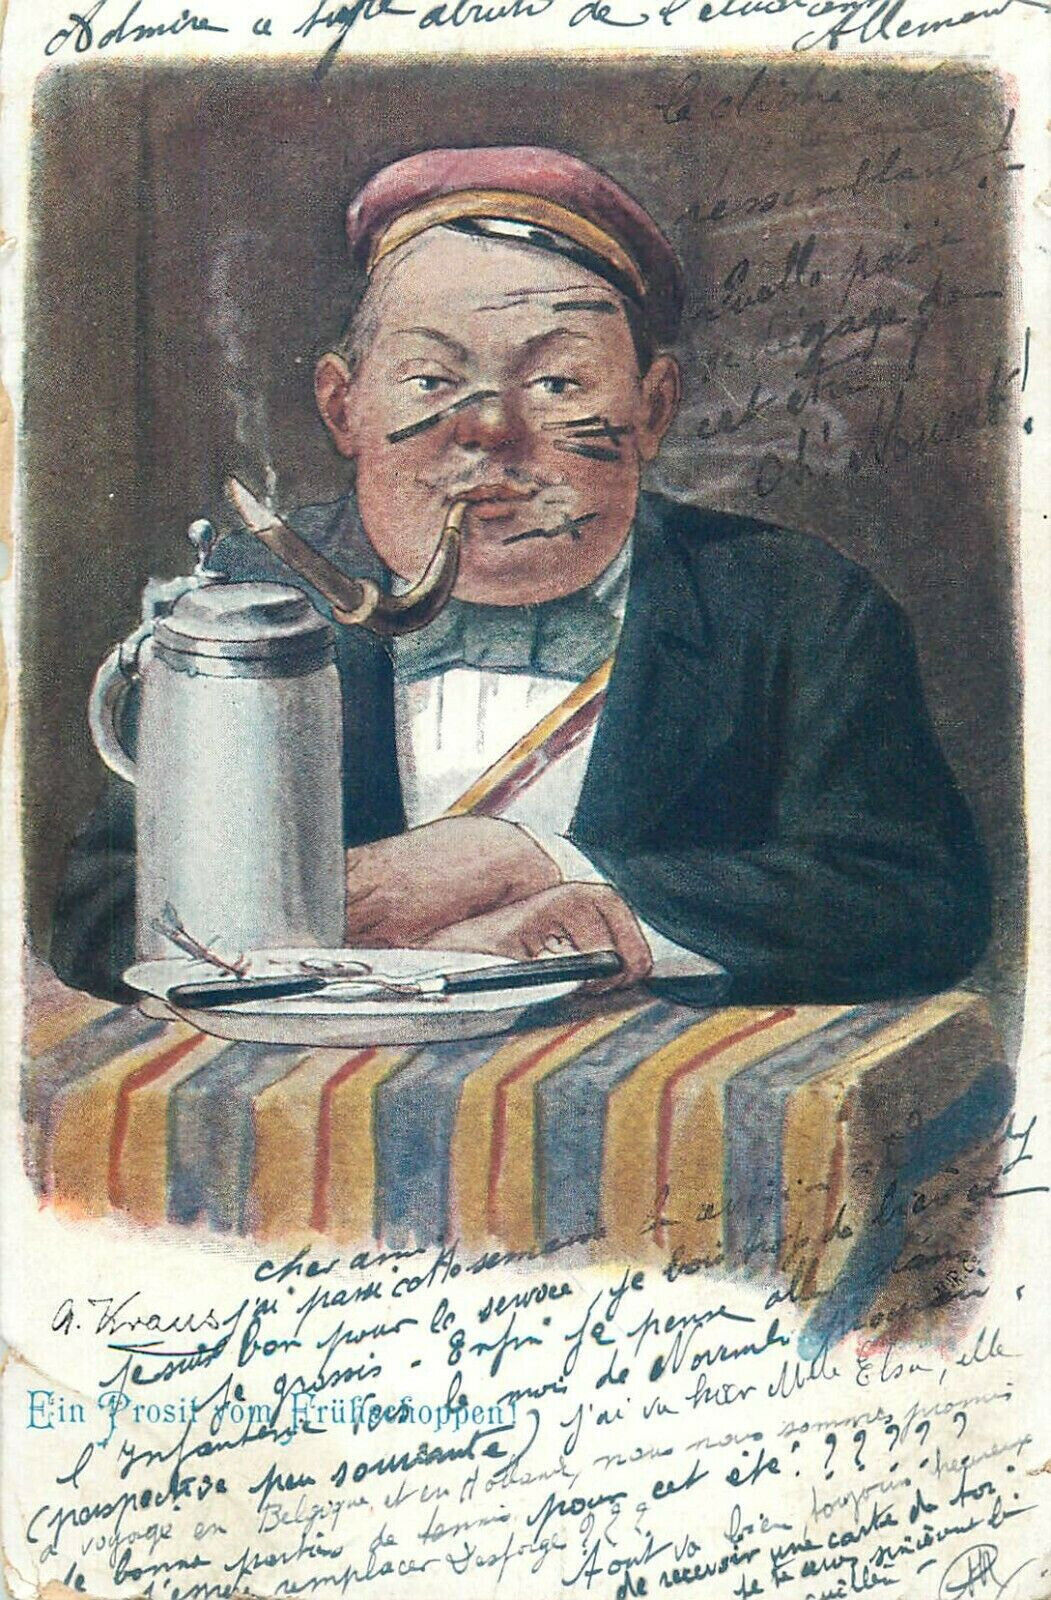 Heidelberg fencing school student with scars caricature pipe & beer humor 1902